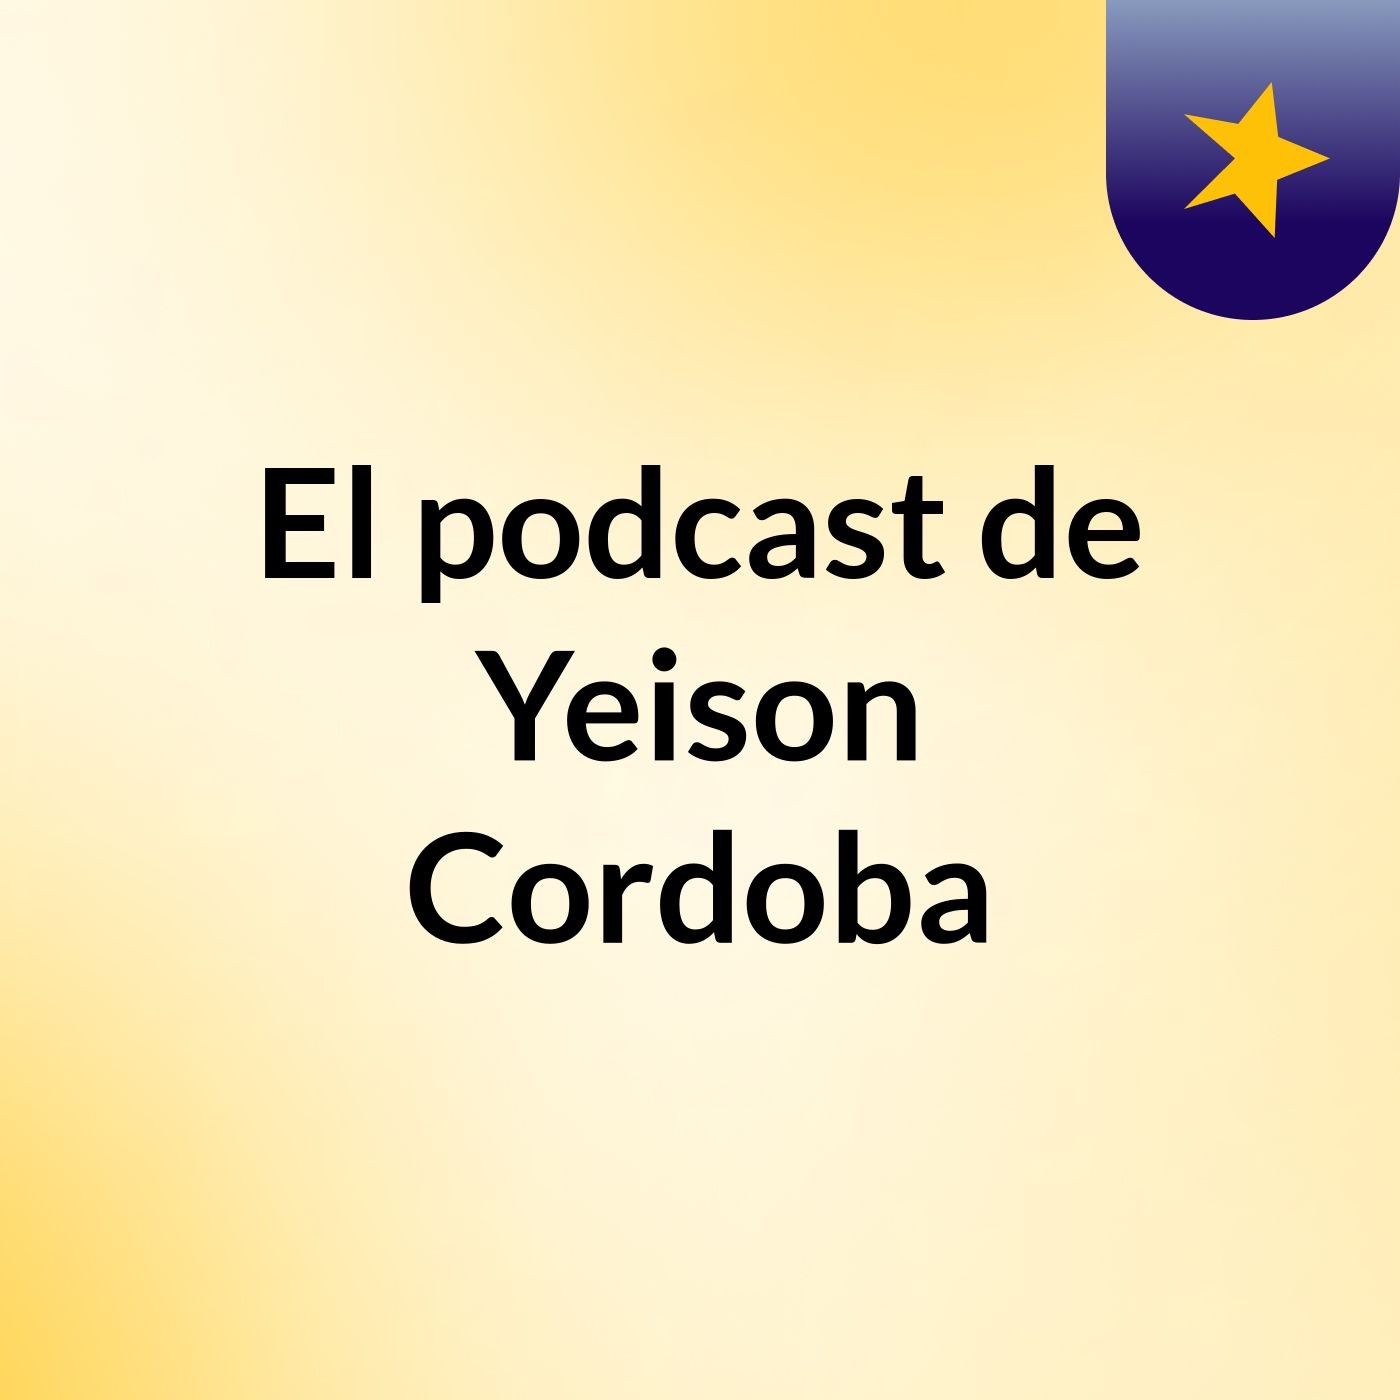 El podcast de Yeison Cordoba